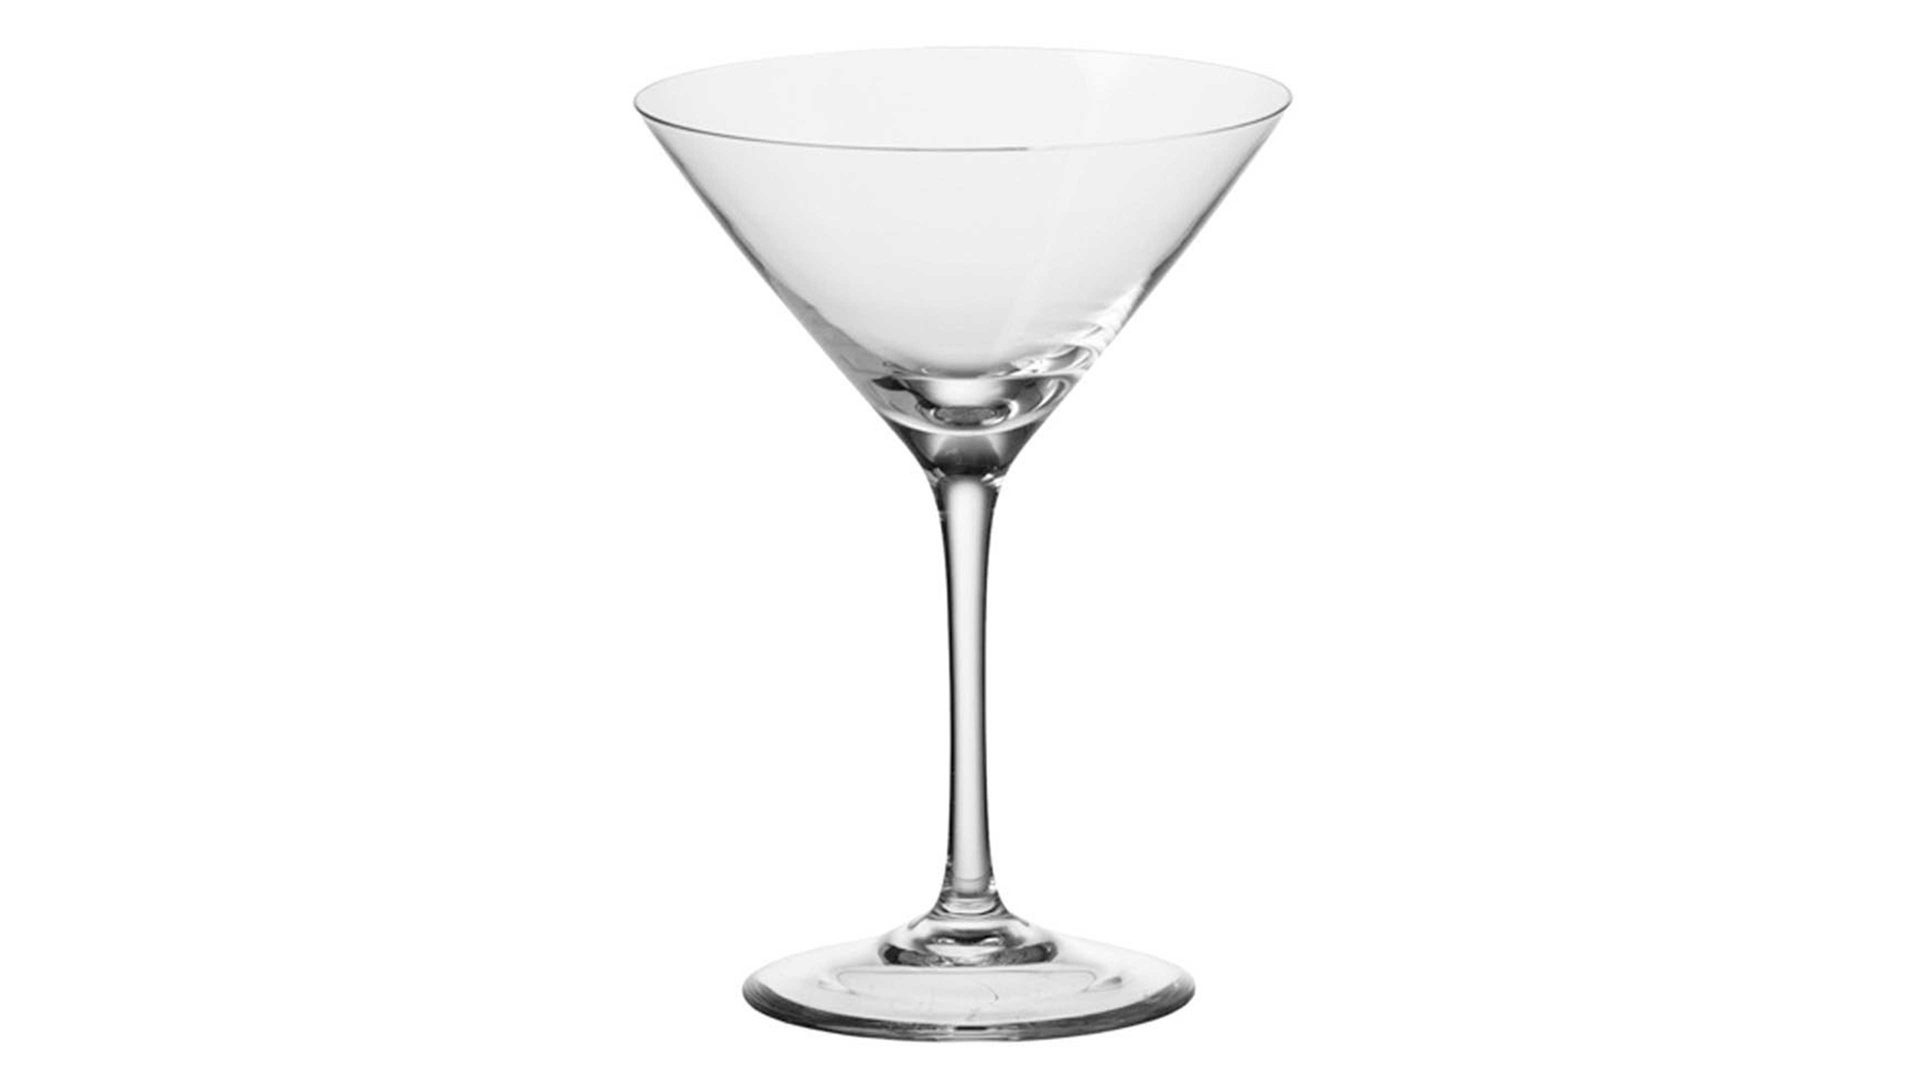 Cocktailglas Leonardo | glaskoch aus Glas in Transparent LEONARDO Cocktailglas Ciao+ TEQTON®-Klarglas - ca. 200 ml Fassungsvermögen